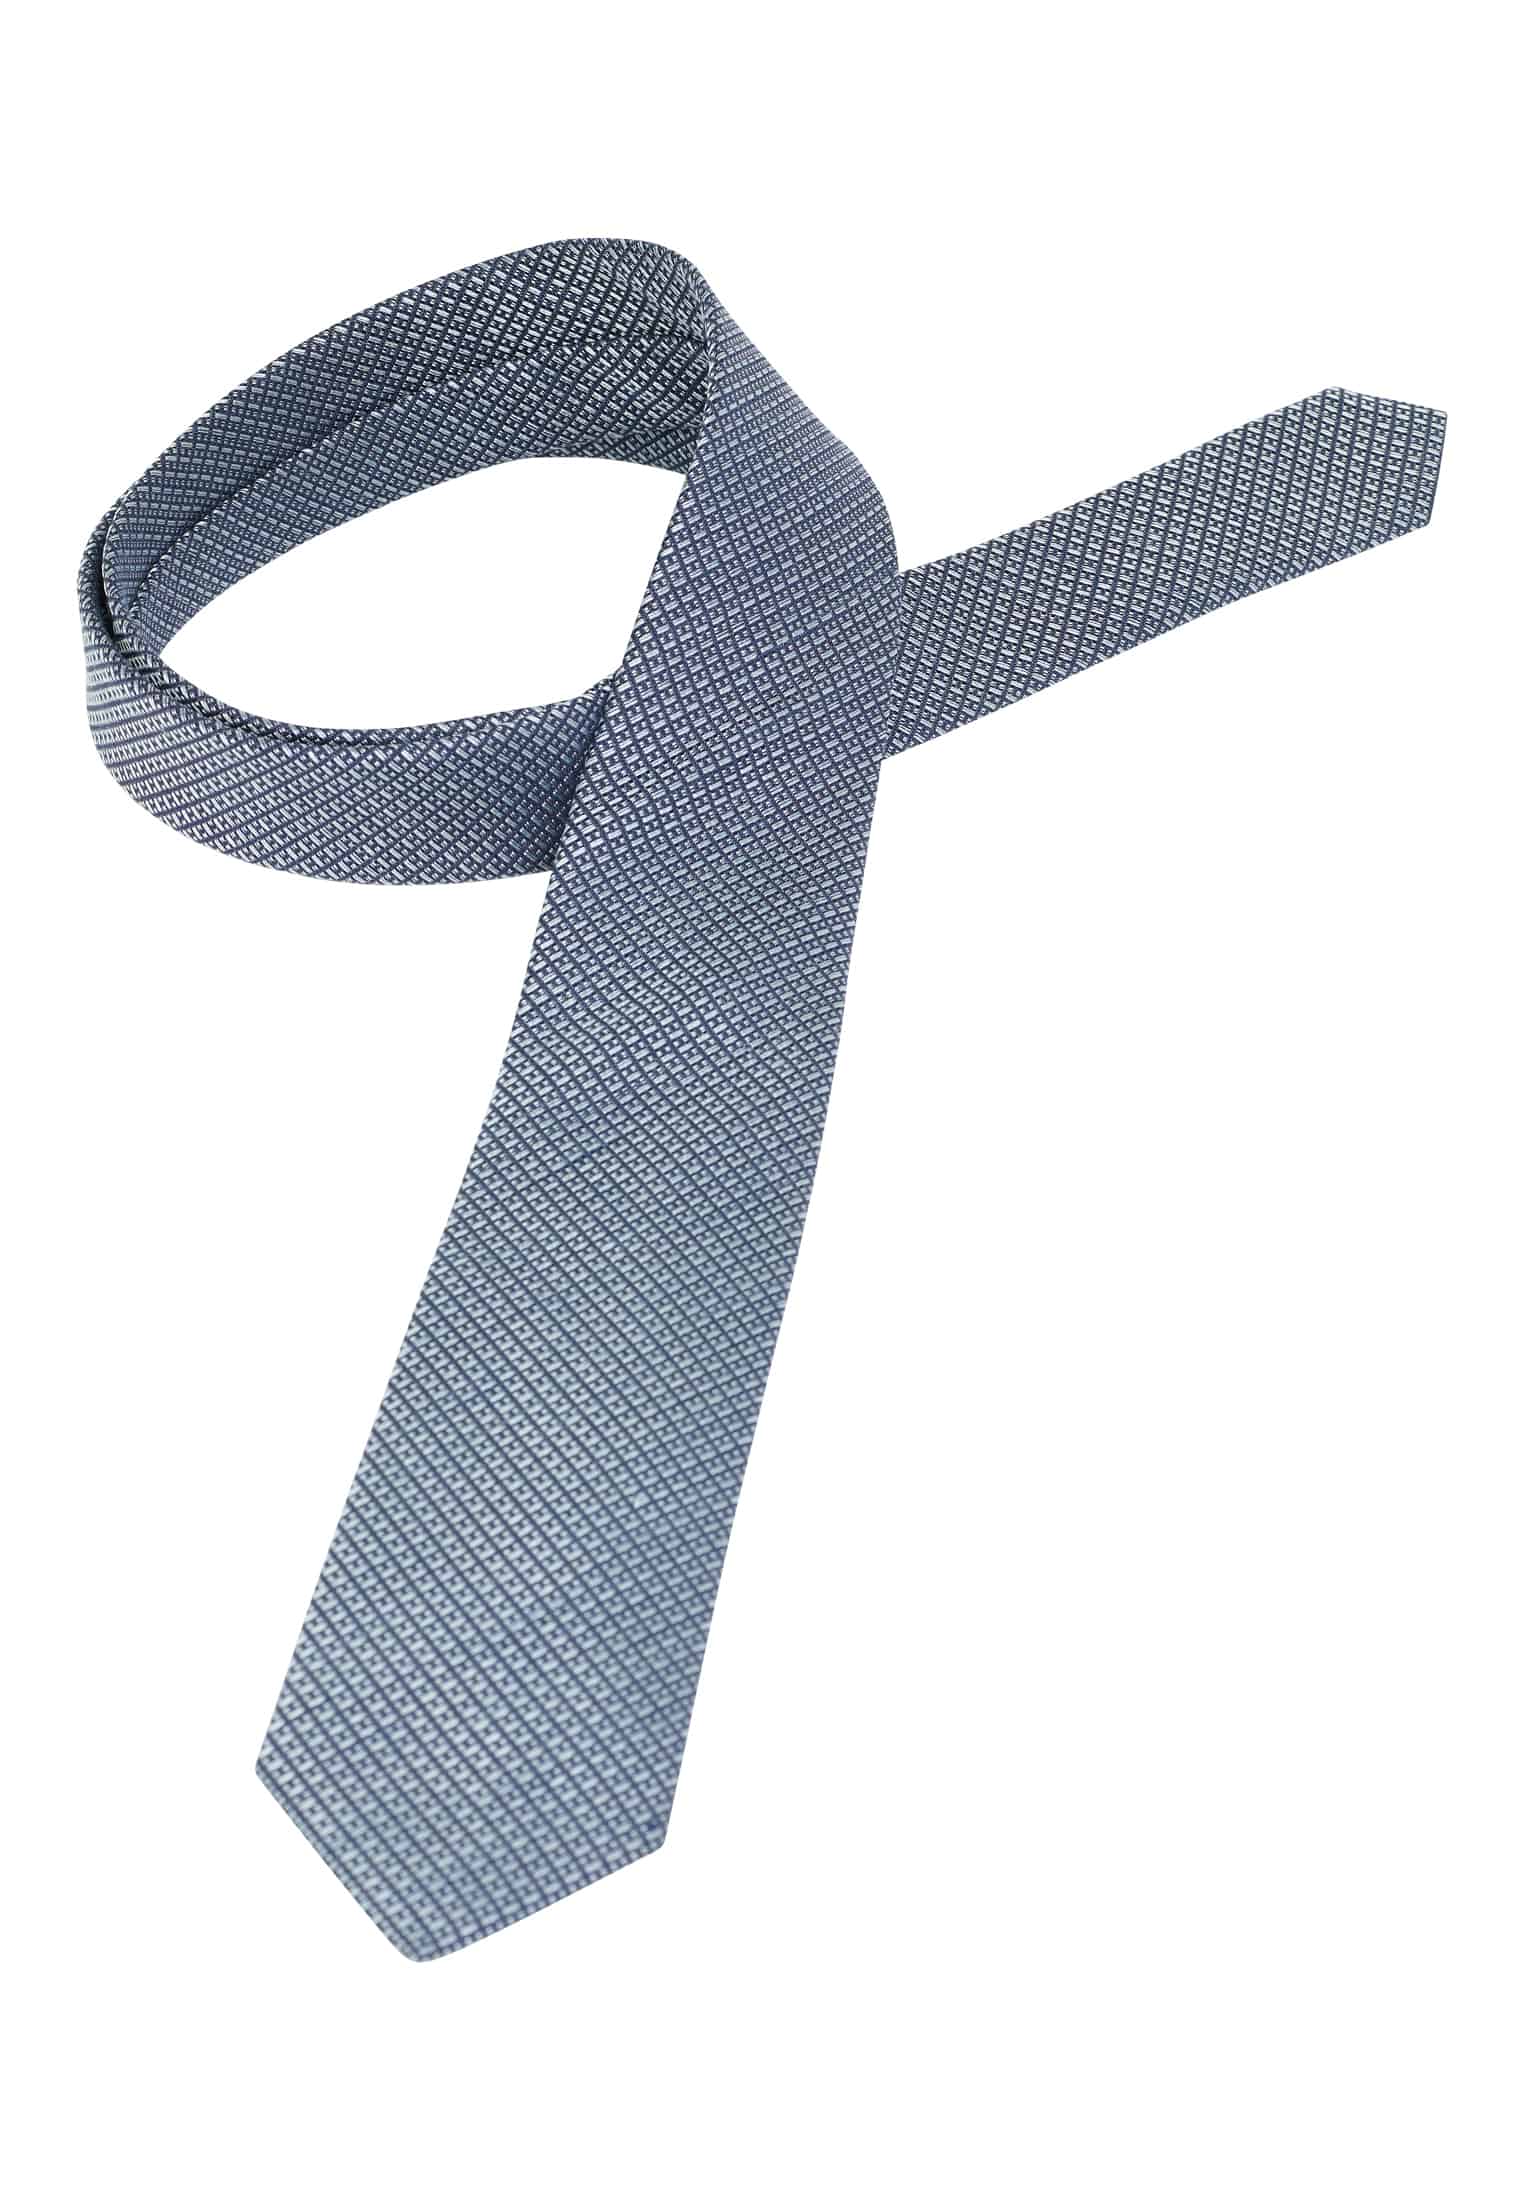 Krawatte in navy/grün gemustert | navy/grün | 142 | 1AC01949-81-88-142